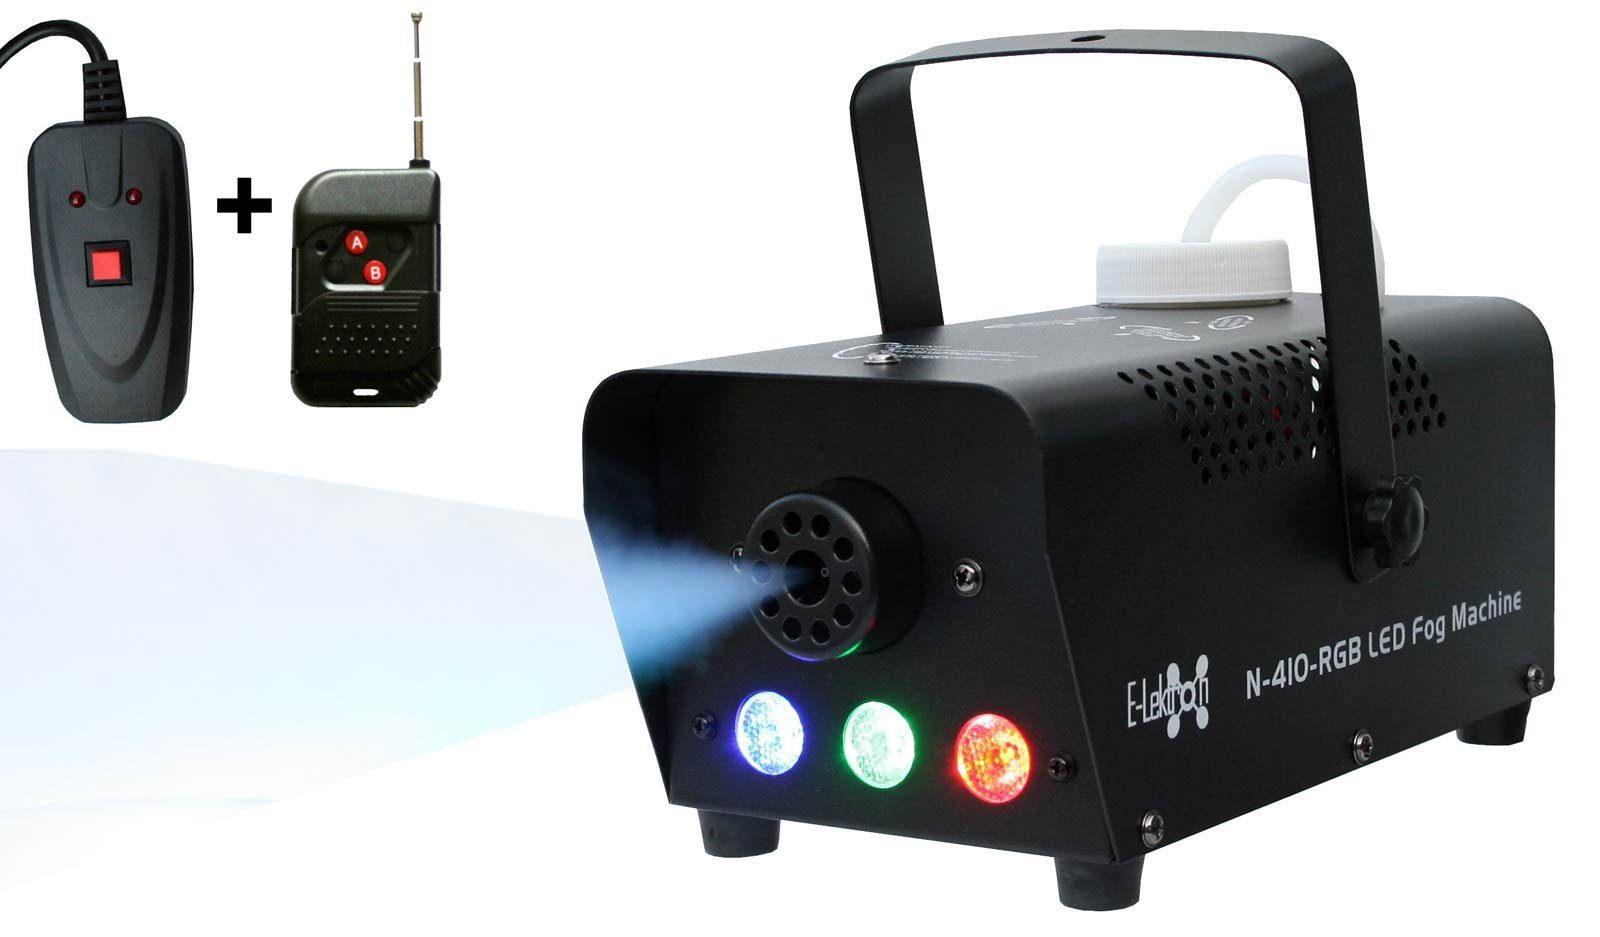 E-Lektron LED Discolicht Nebelmaschine N-410-RGB, Ohne Nebelfluid, LED fest integriert, RGB, Nebelmaschine mit LED Beleuchtung | Alle Lampen